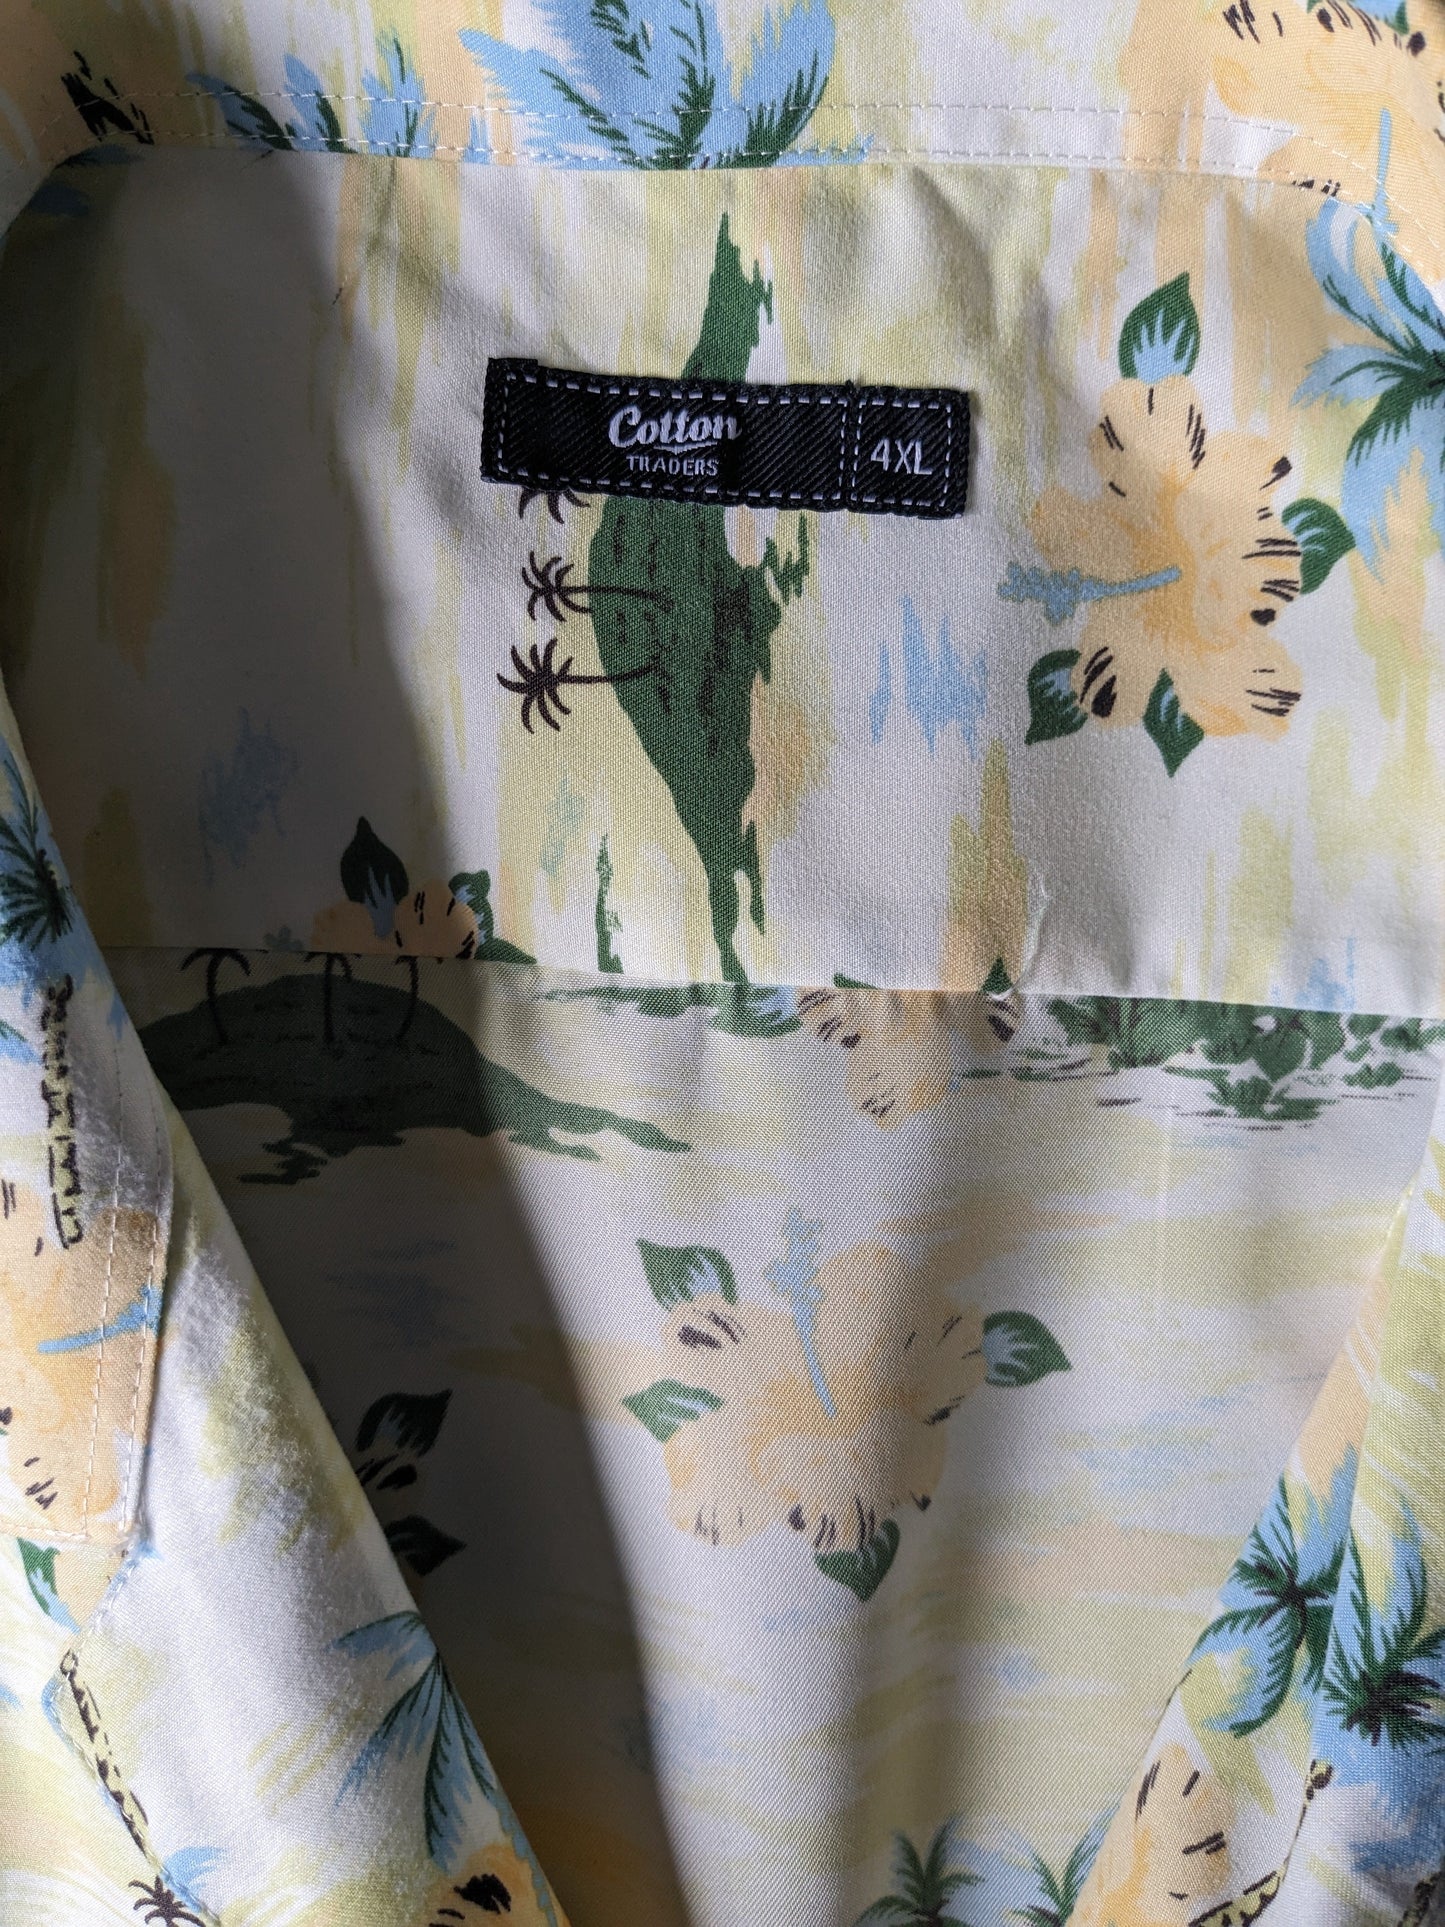 Coton Traders Hawaii Shirt Short Sleeve. Impression jaune bleu vert. Taille 4xl / xxxxl.